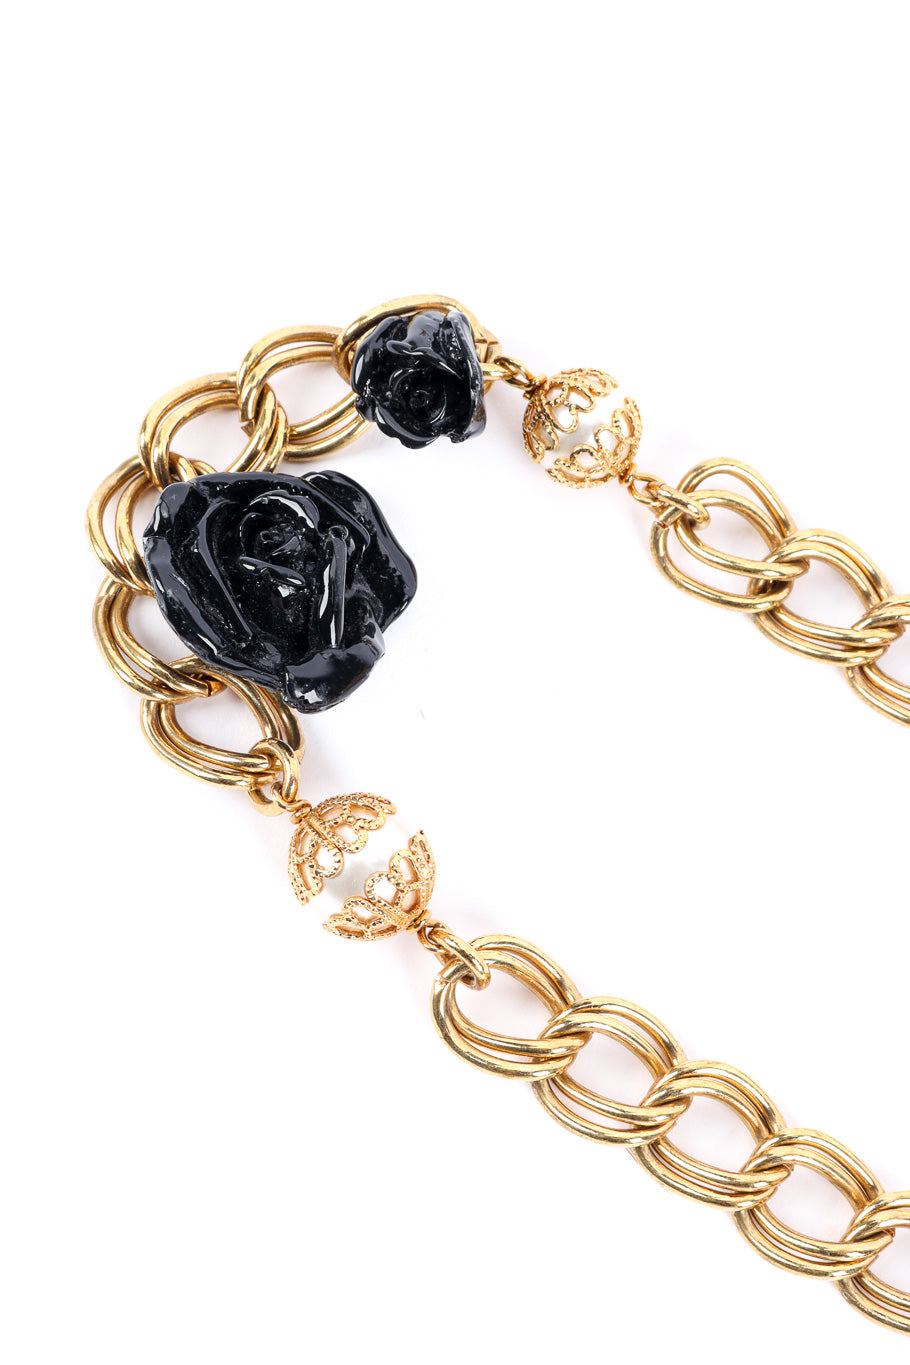 Dolce & Gabbana black rose chain belt detail @recessla